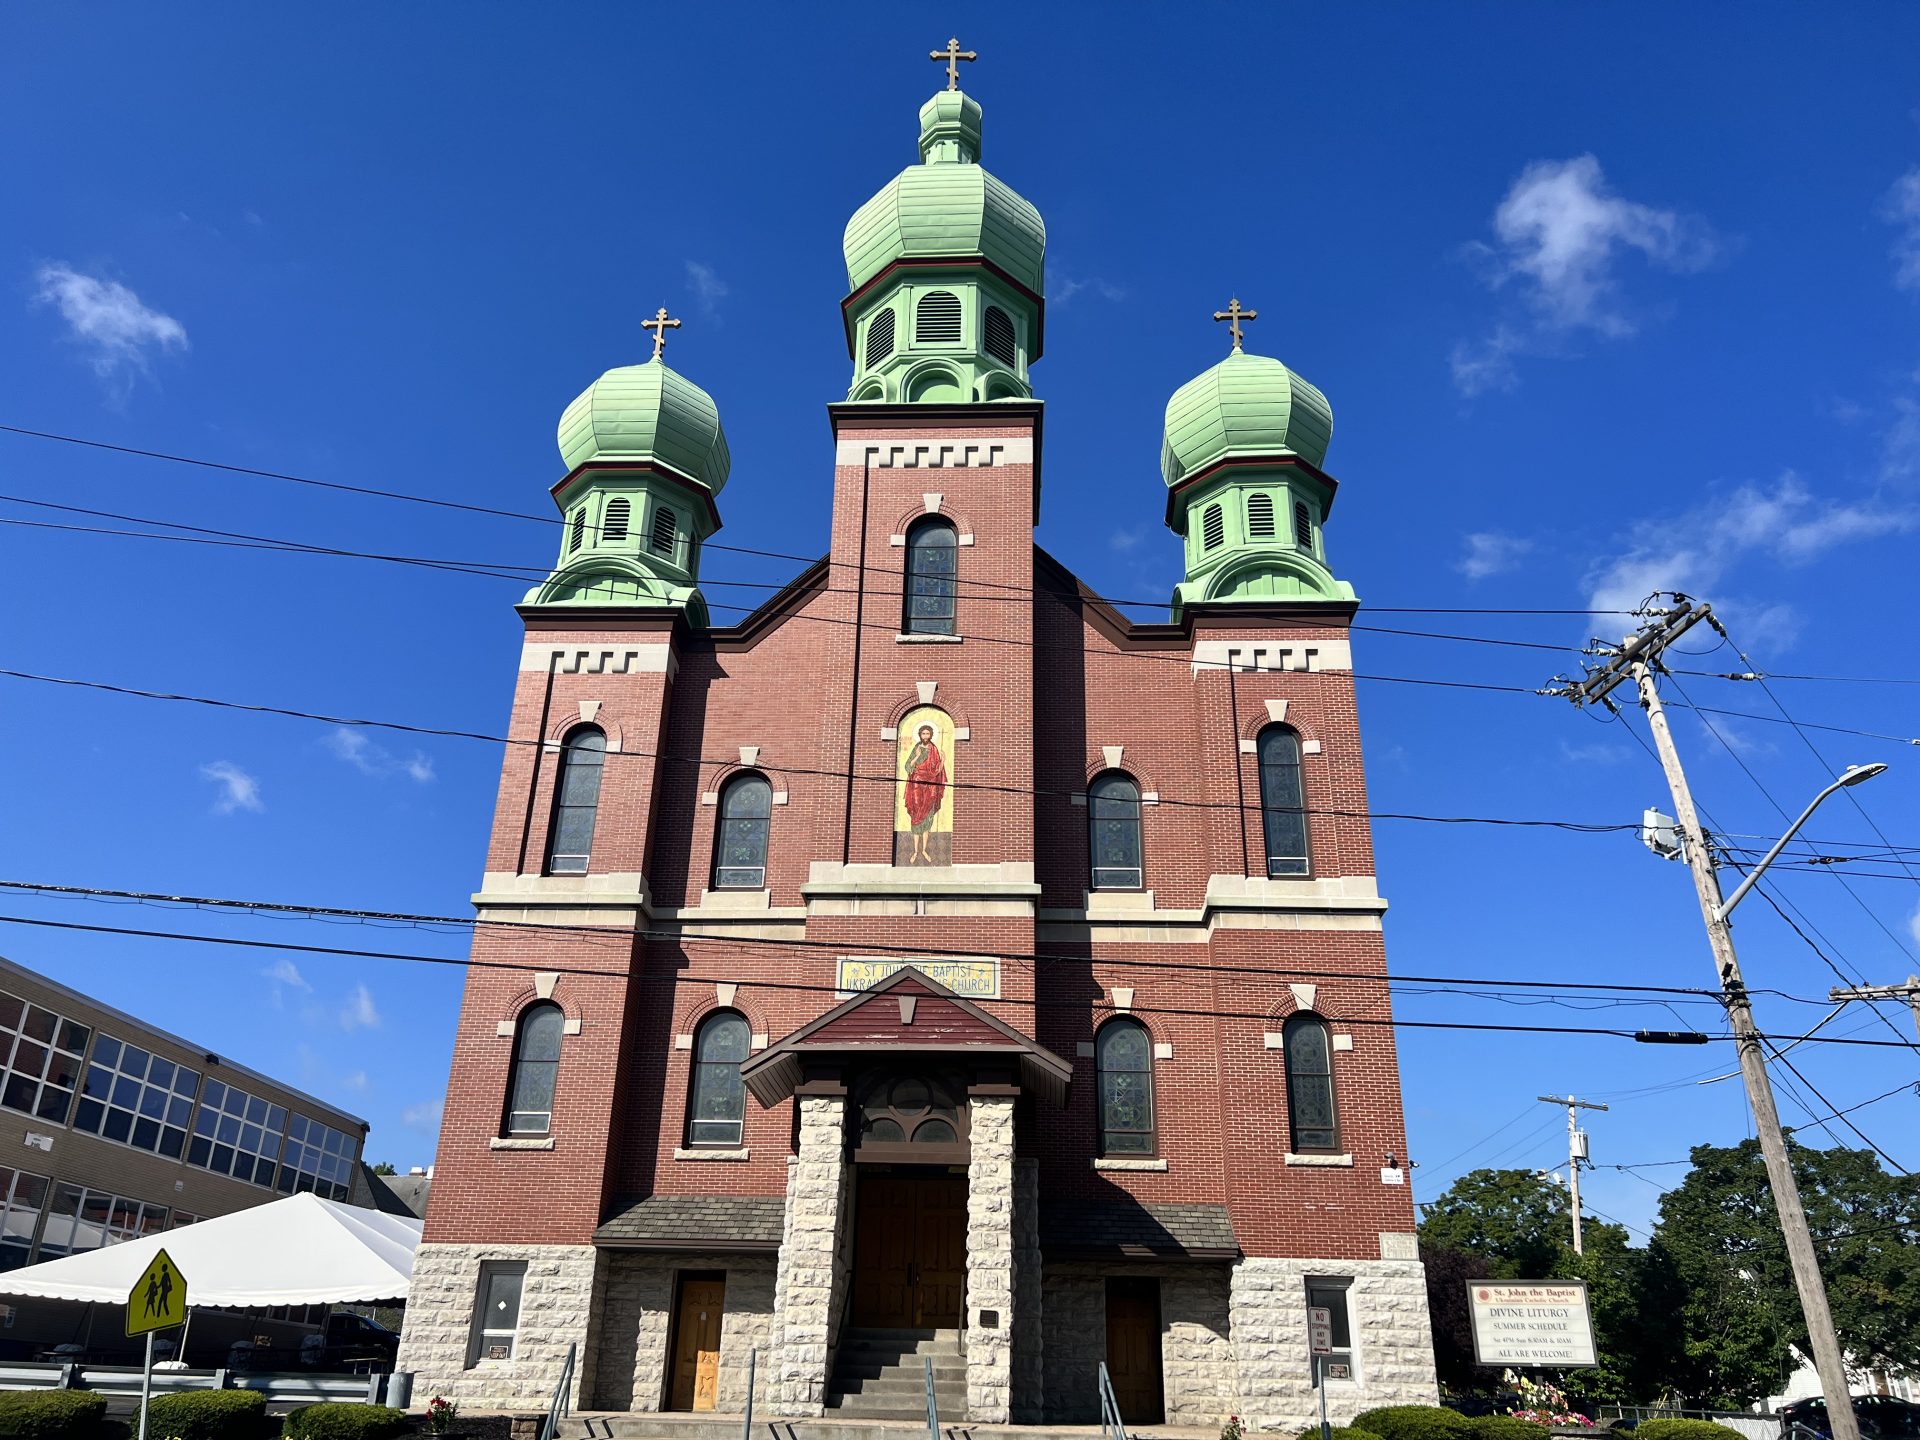 The Saint John the Baptist Catholic Church sits steady in downtown Syracuse